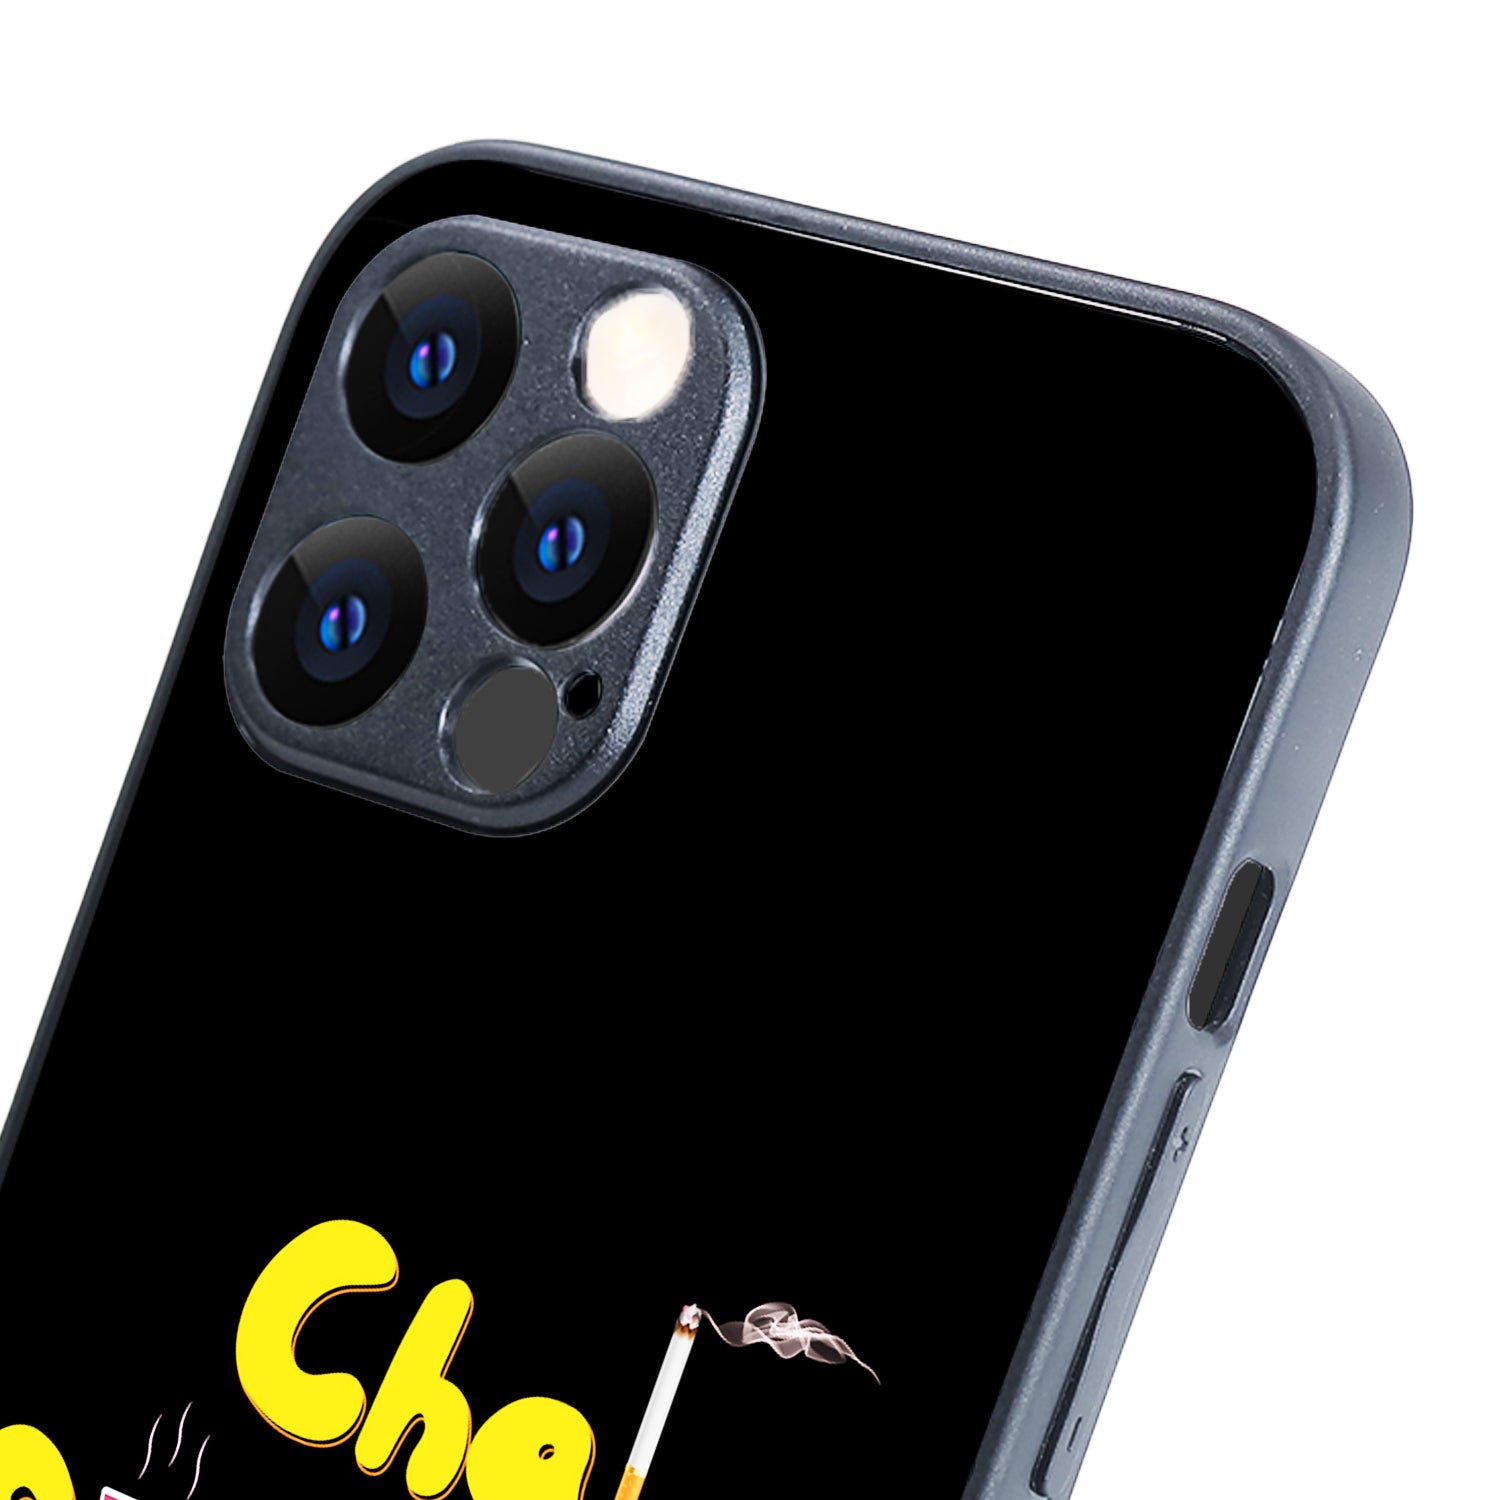 Chai-Sutta Motivational Quotes iPhone 12 Pro Max Case